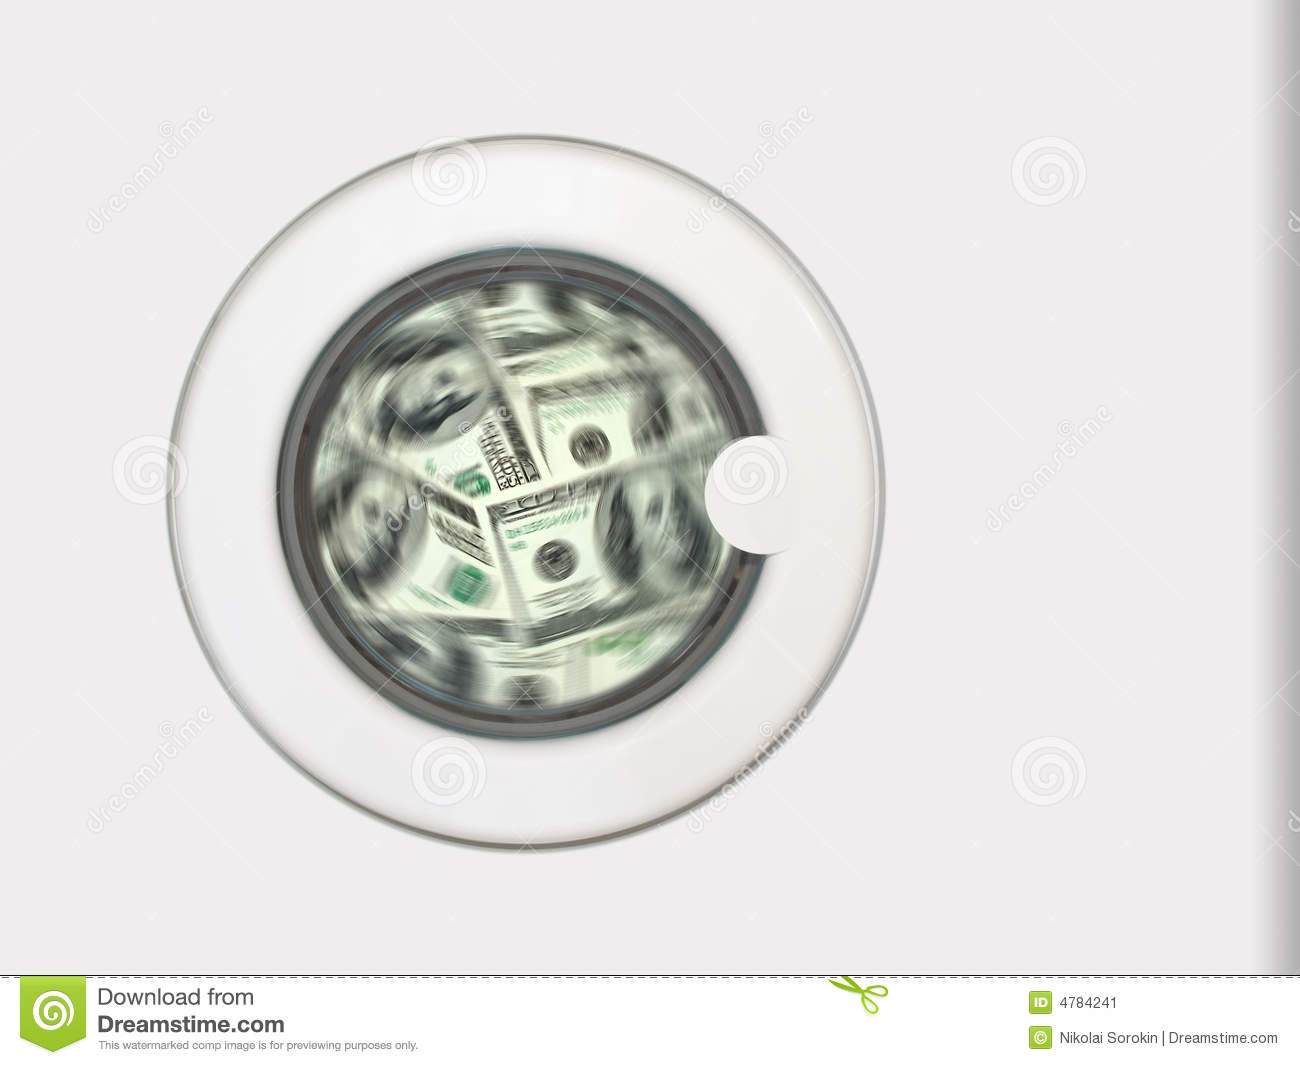 Money In Washing Machine Stock Image   Image  4784241